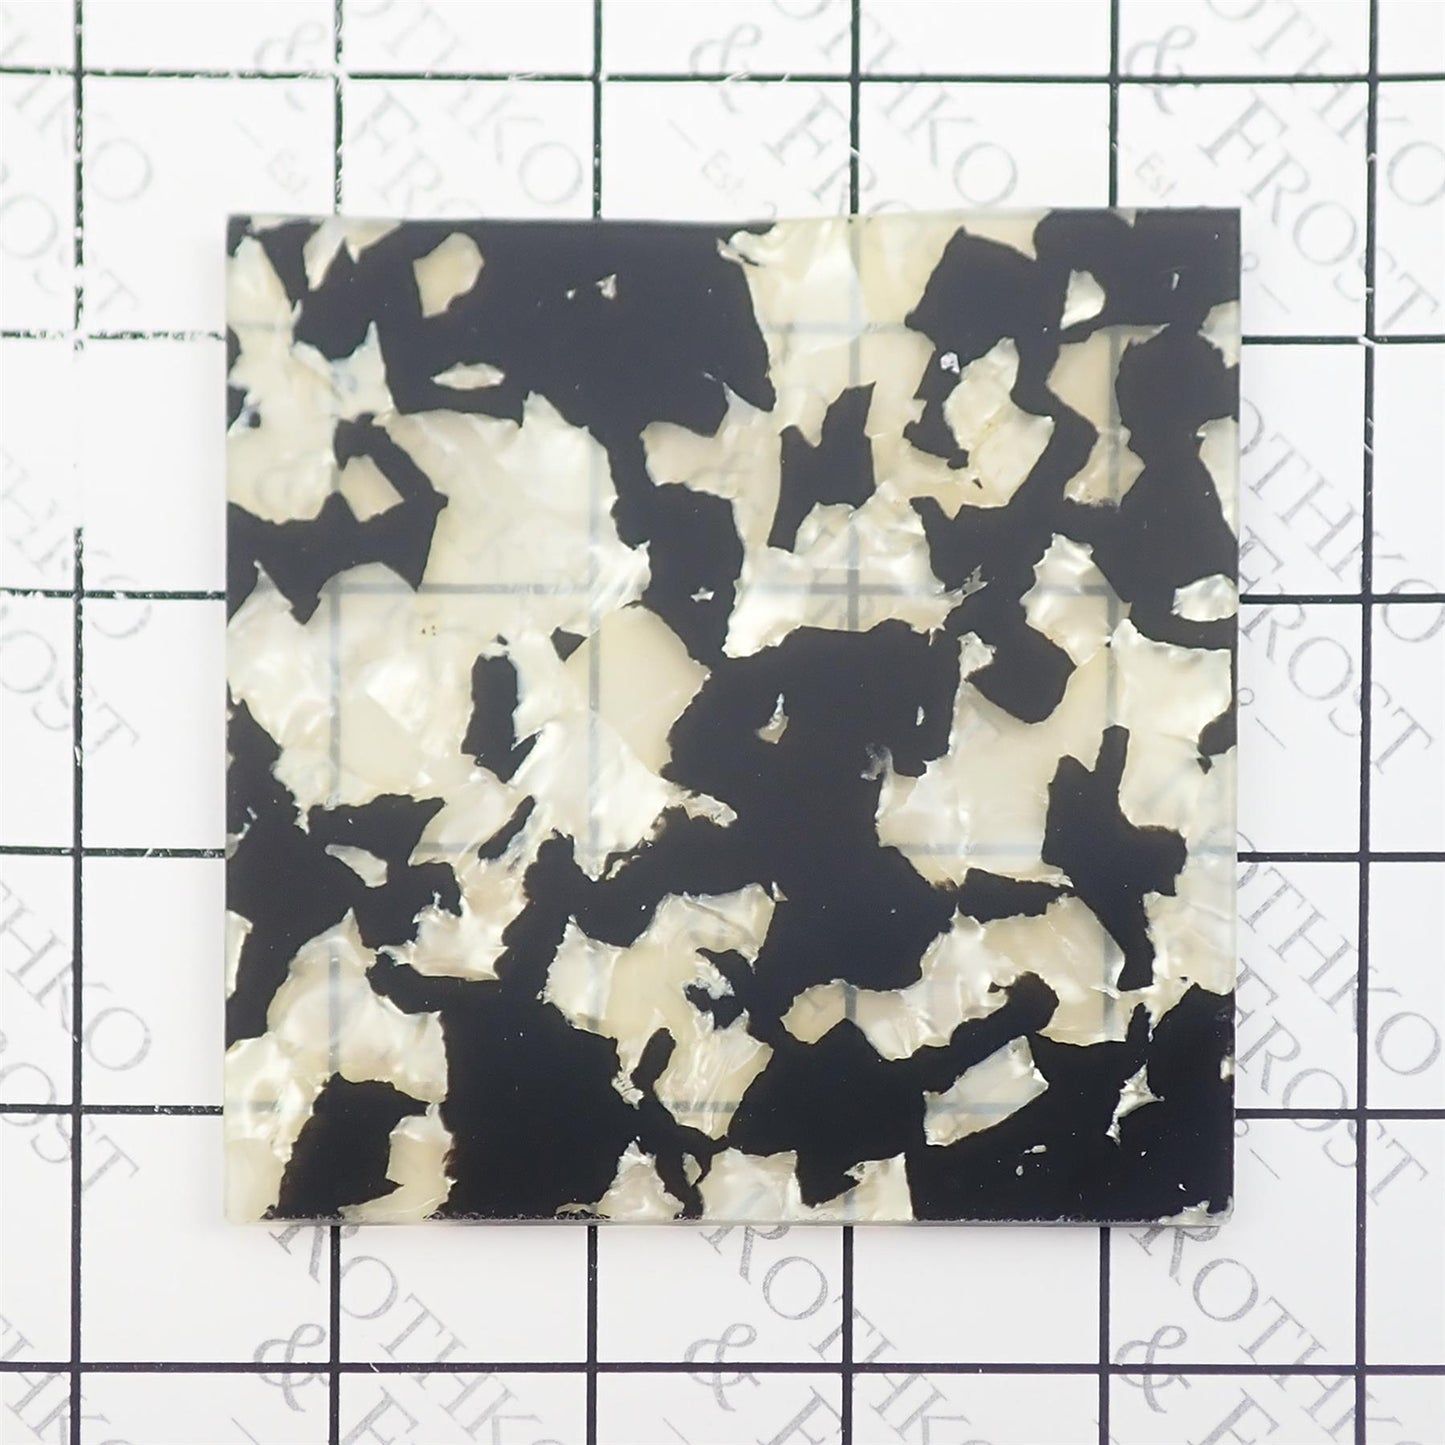 Incudo Black and White Pearloid Celluloid Laminate Acrylic Sheet - 600x400x3mm (23.6x15.75x0.12")